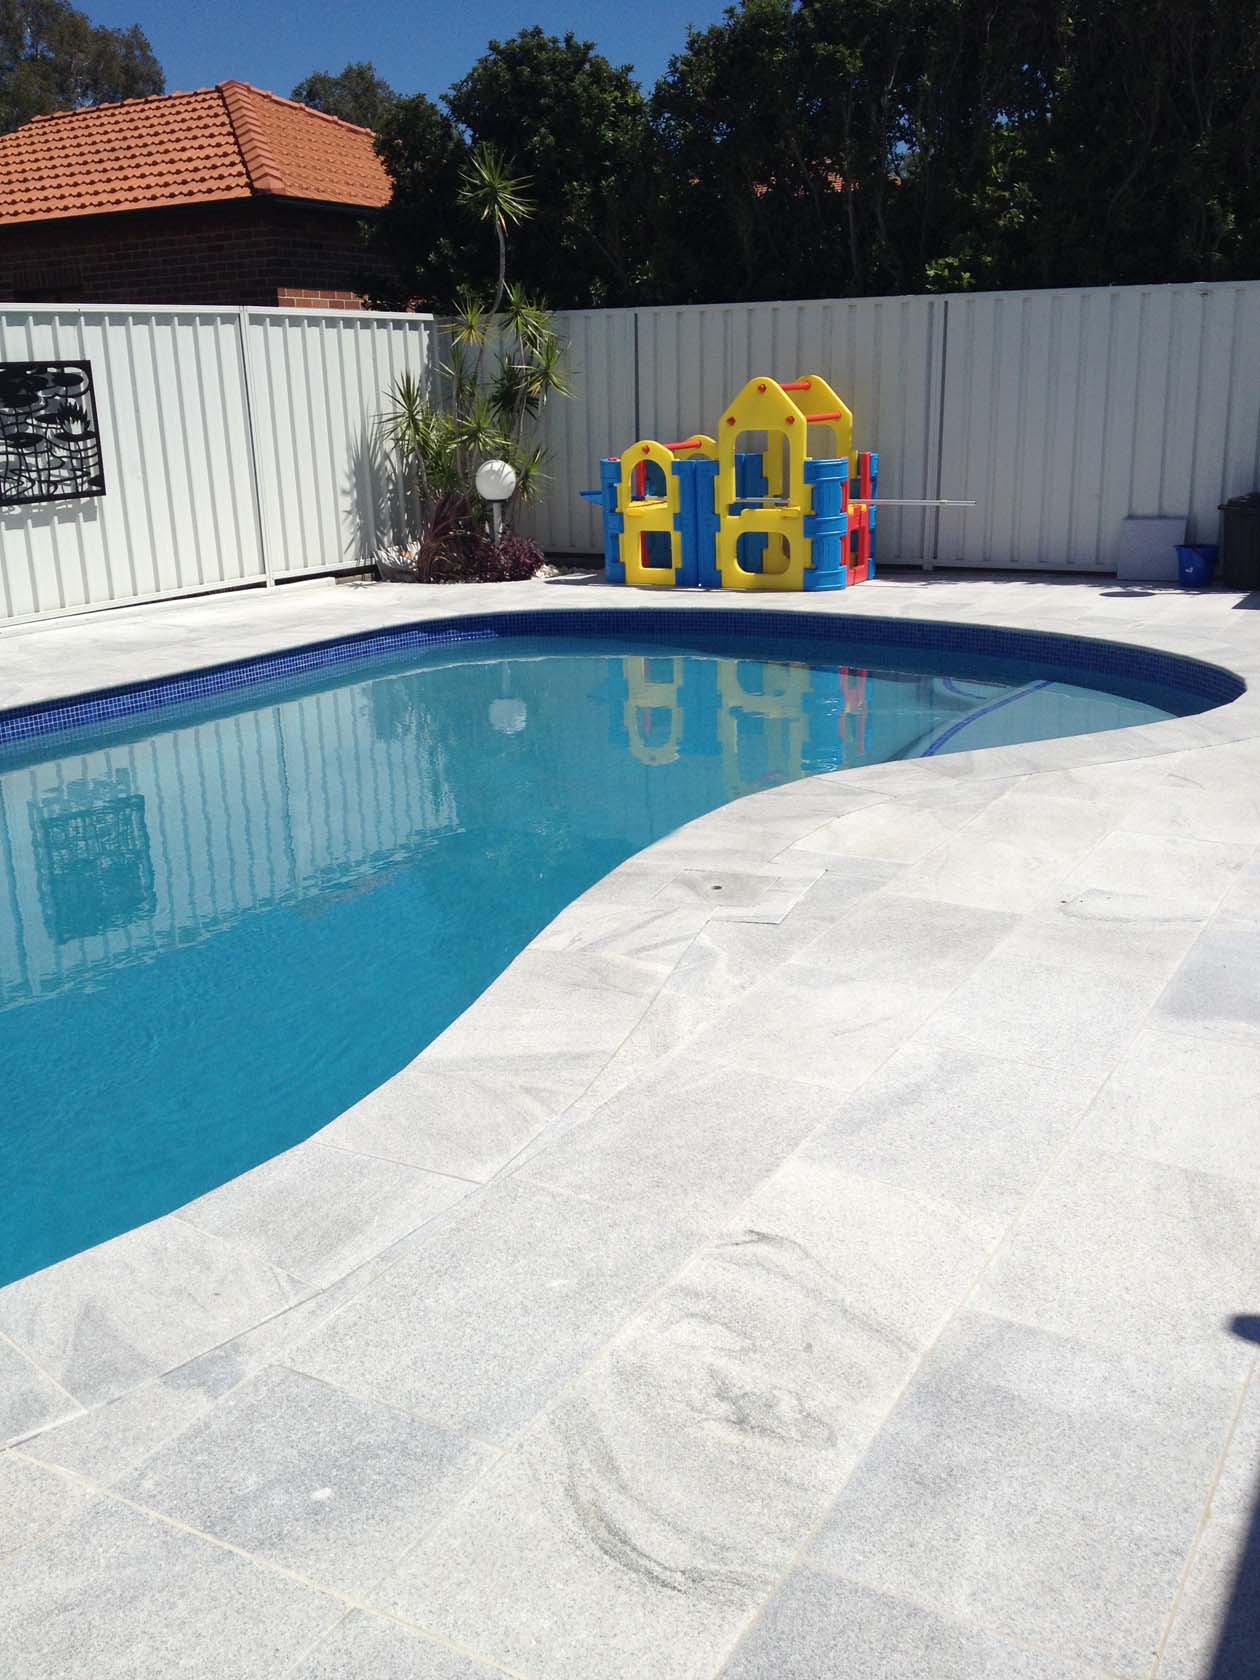 Sandwave Granite Natural Stone pool coping and surround tiles